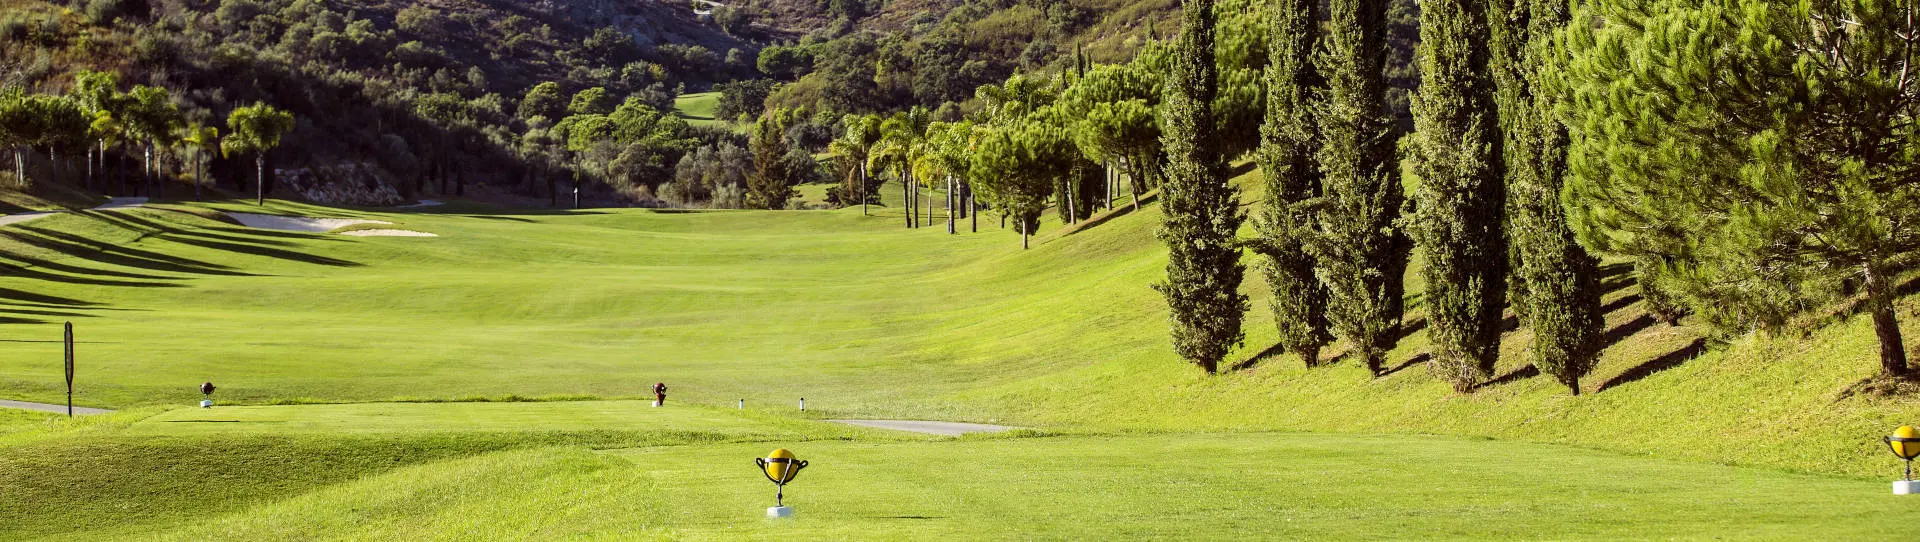 Spain Golf Driving Range - Villapadierna Golf Club - Photo 3